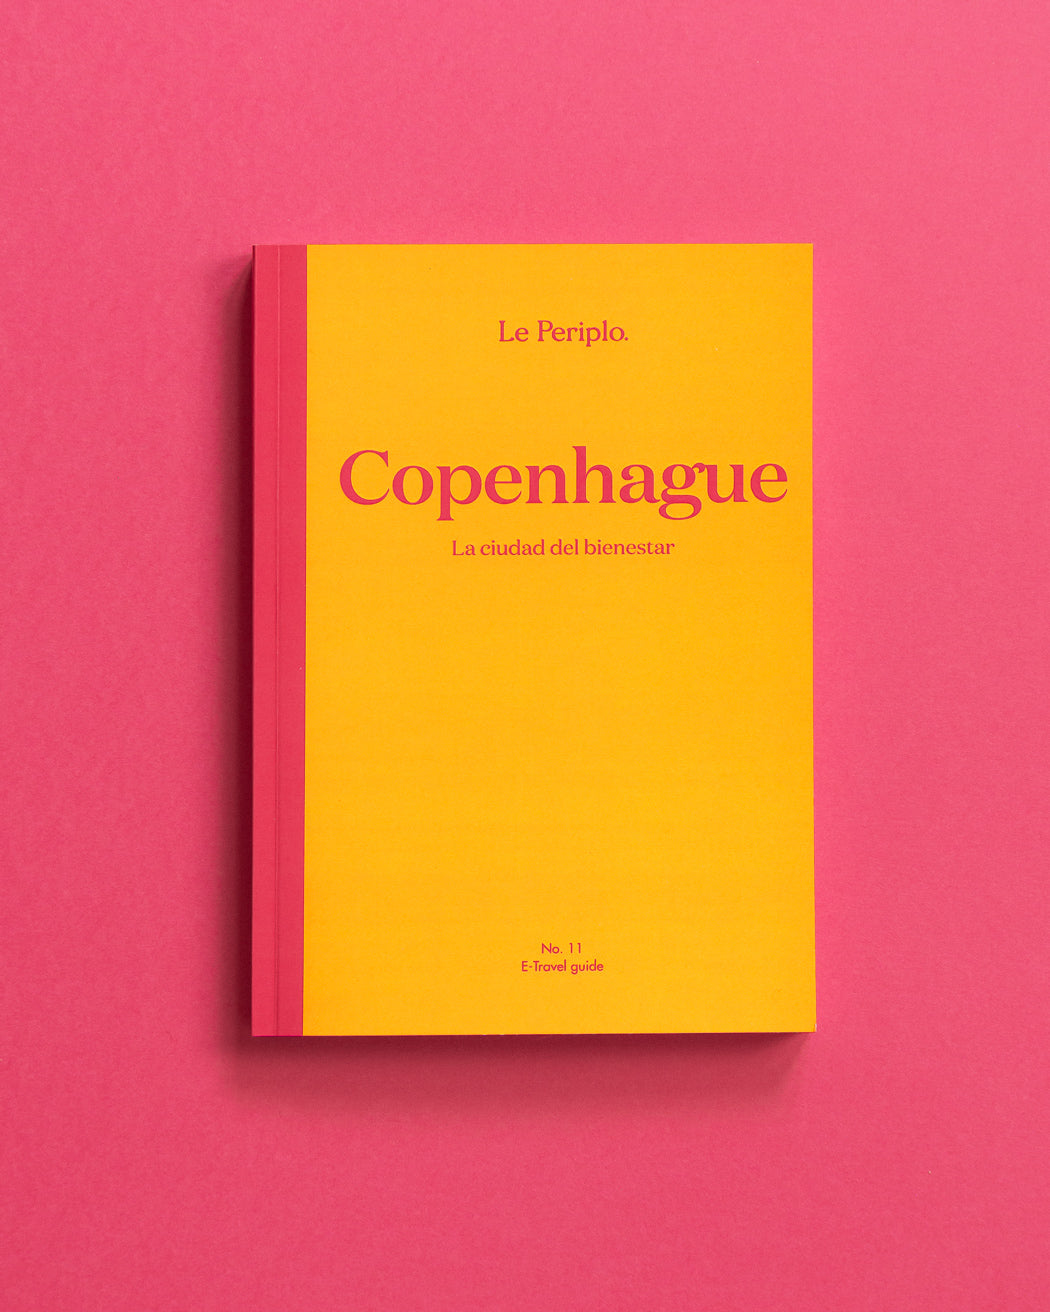 Copenhagen (printed) Spanish version